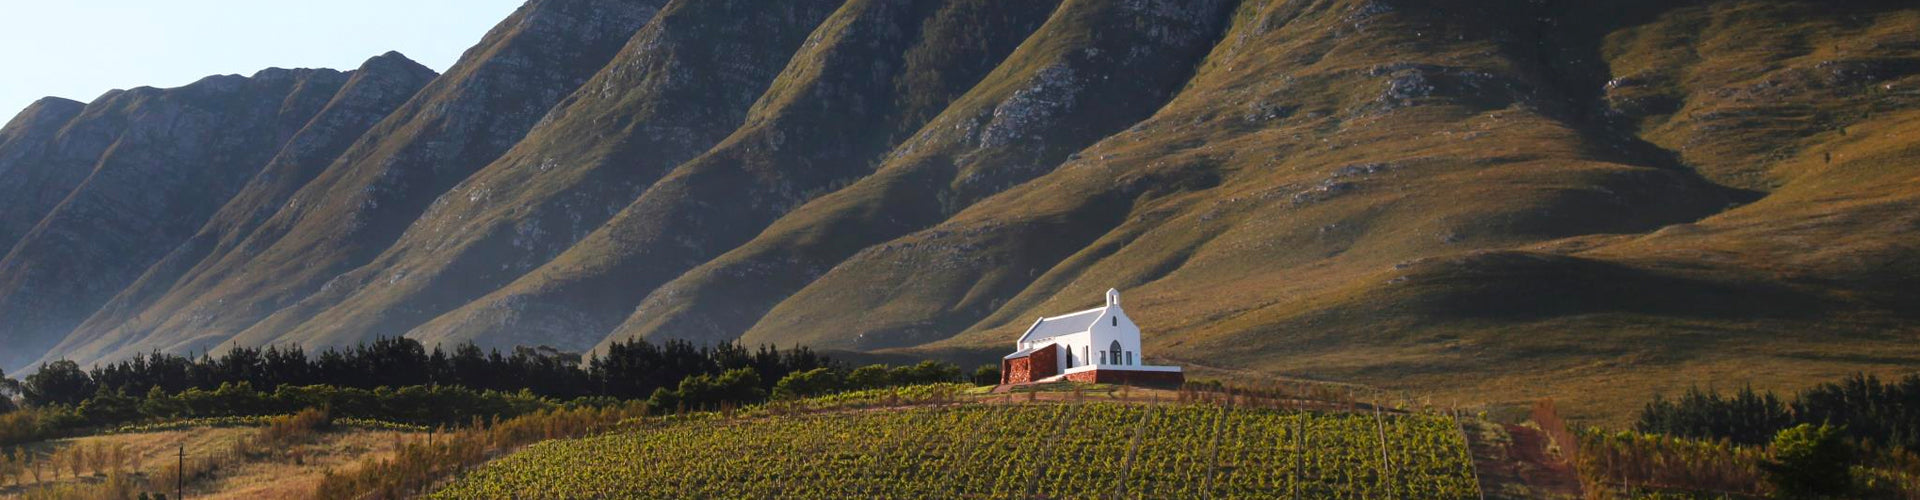 The Wine Lounge overlooking the Ataraxia Vineyards in Hemel-en-Arde, South Africa